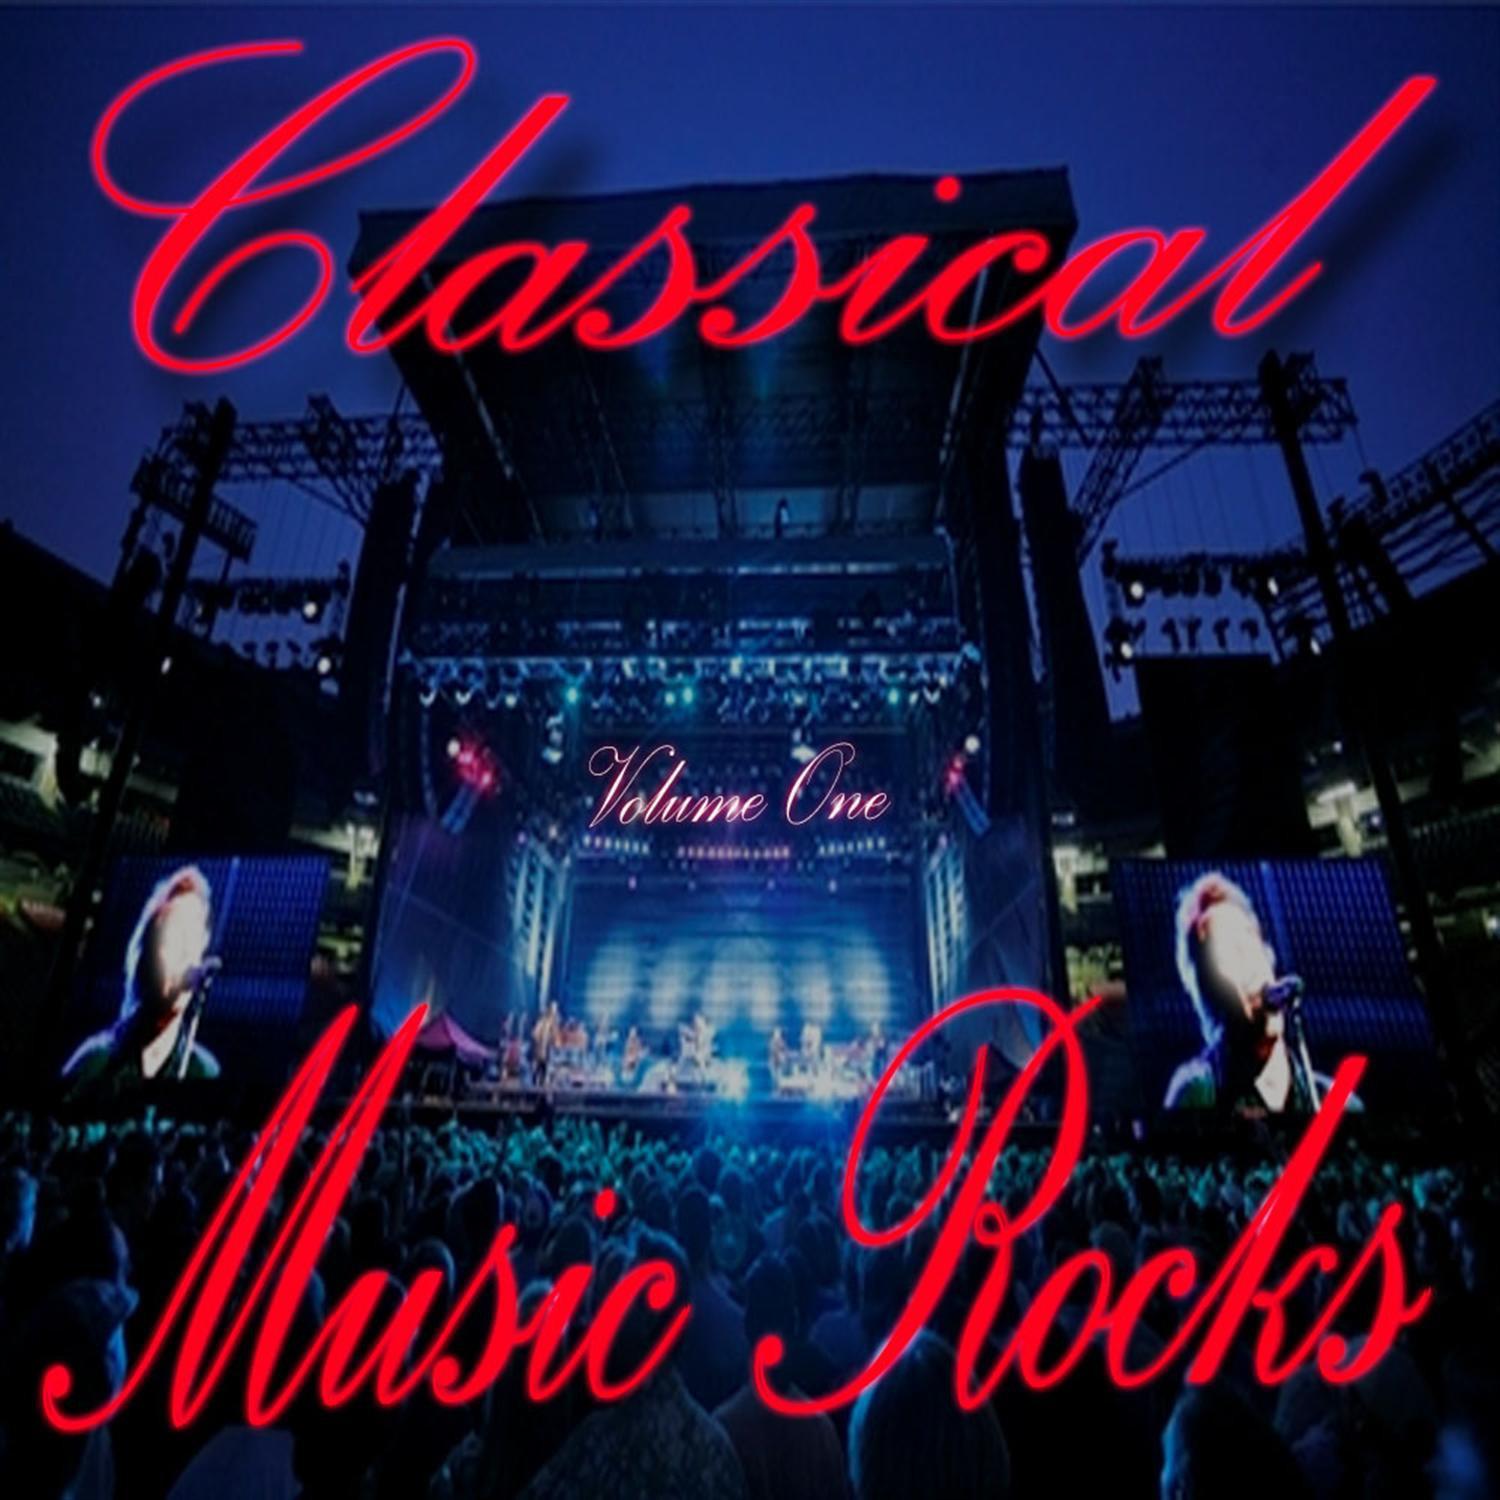 Classical Music Rocks Volume 1